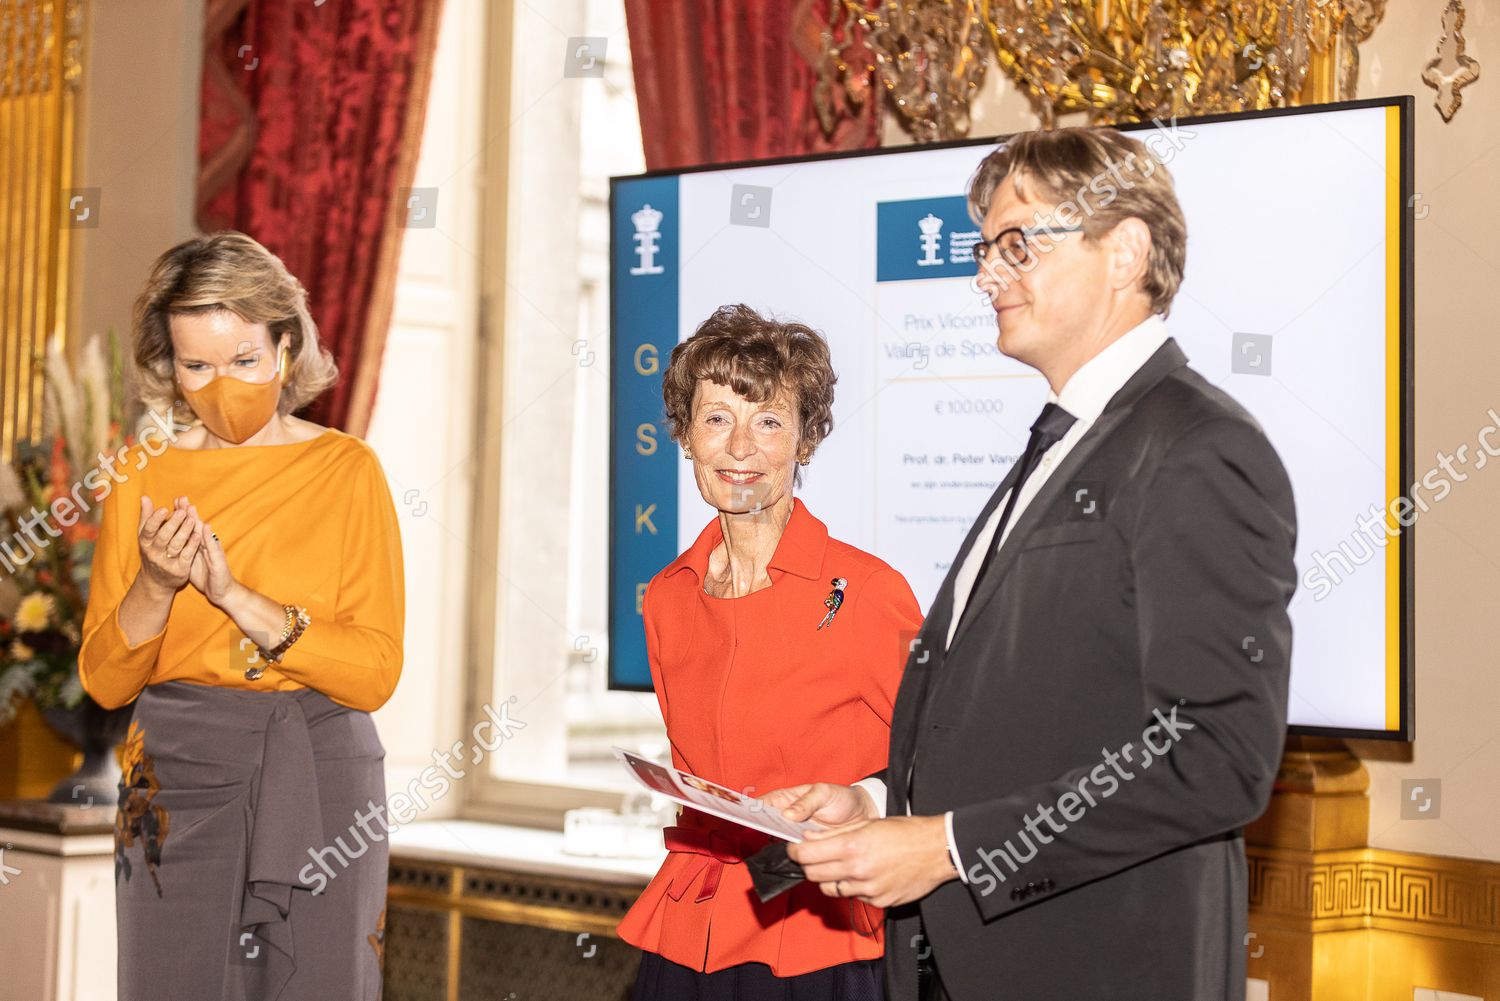 royals-queen-elisabeth-foundation-award-brussels-belgium-shutterstock-editorial-12548022h.jpg